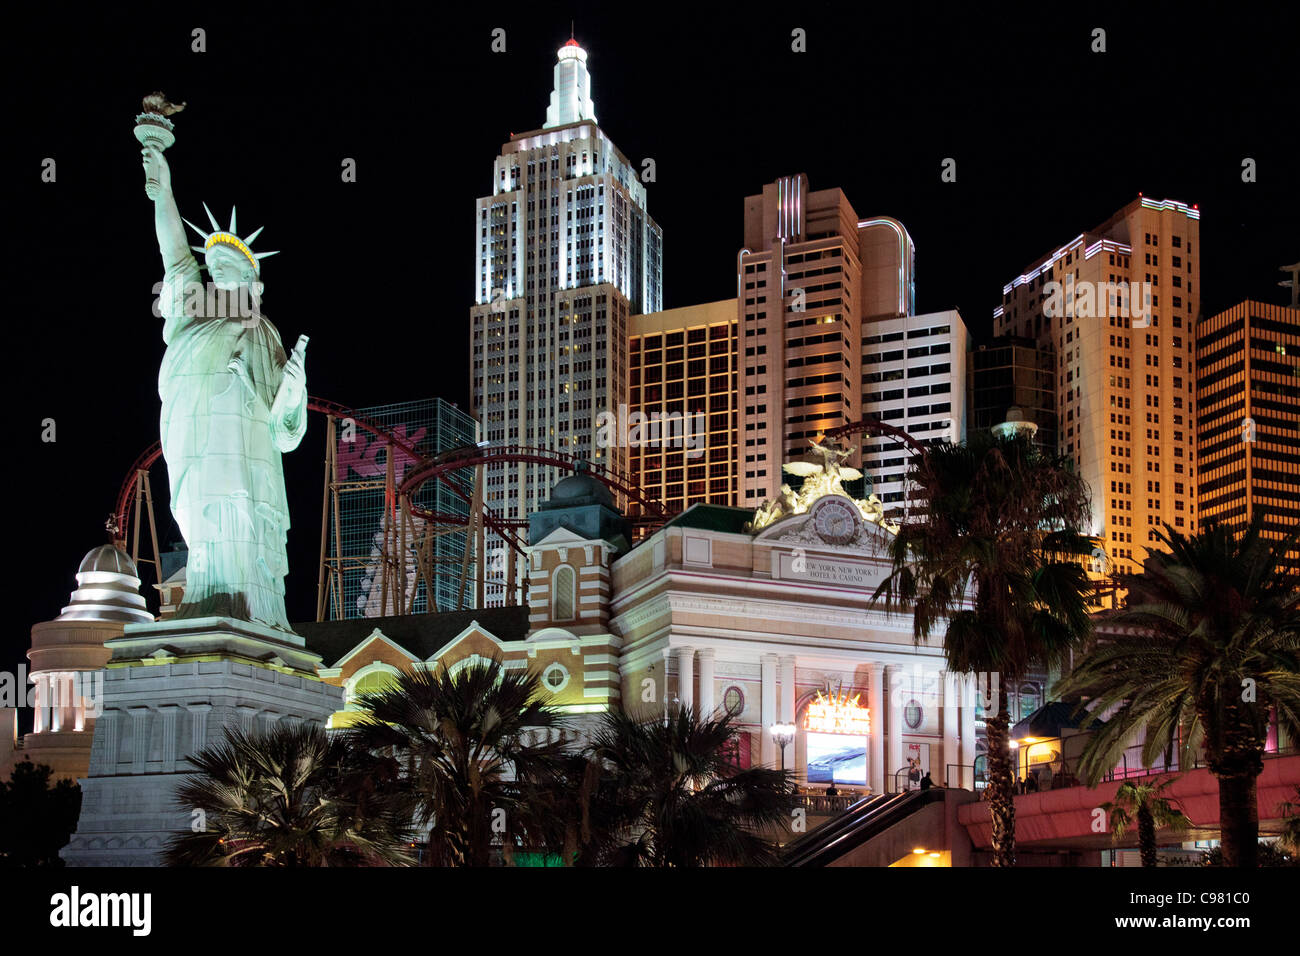 Roller Coaster of New York-New York Hotel and Casino Editorial Stock Photo  - Image of strip, casino: 219036013